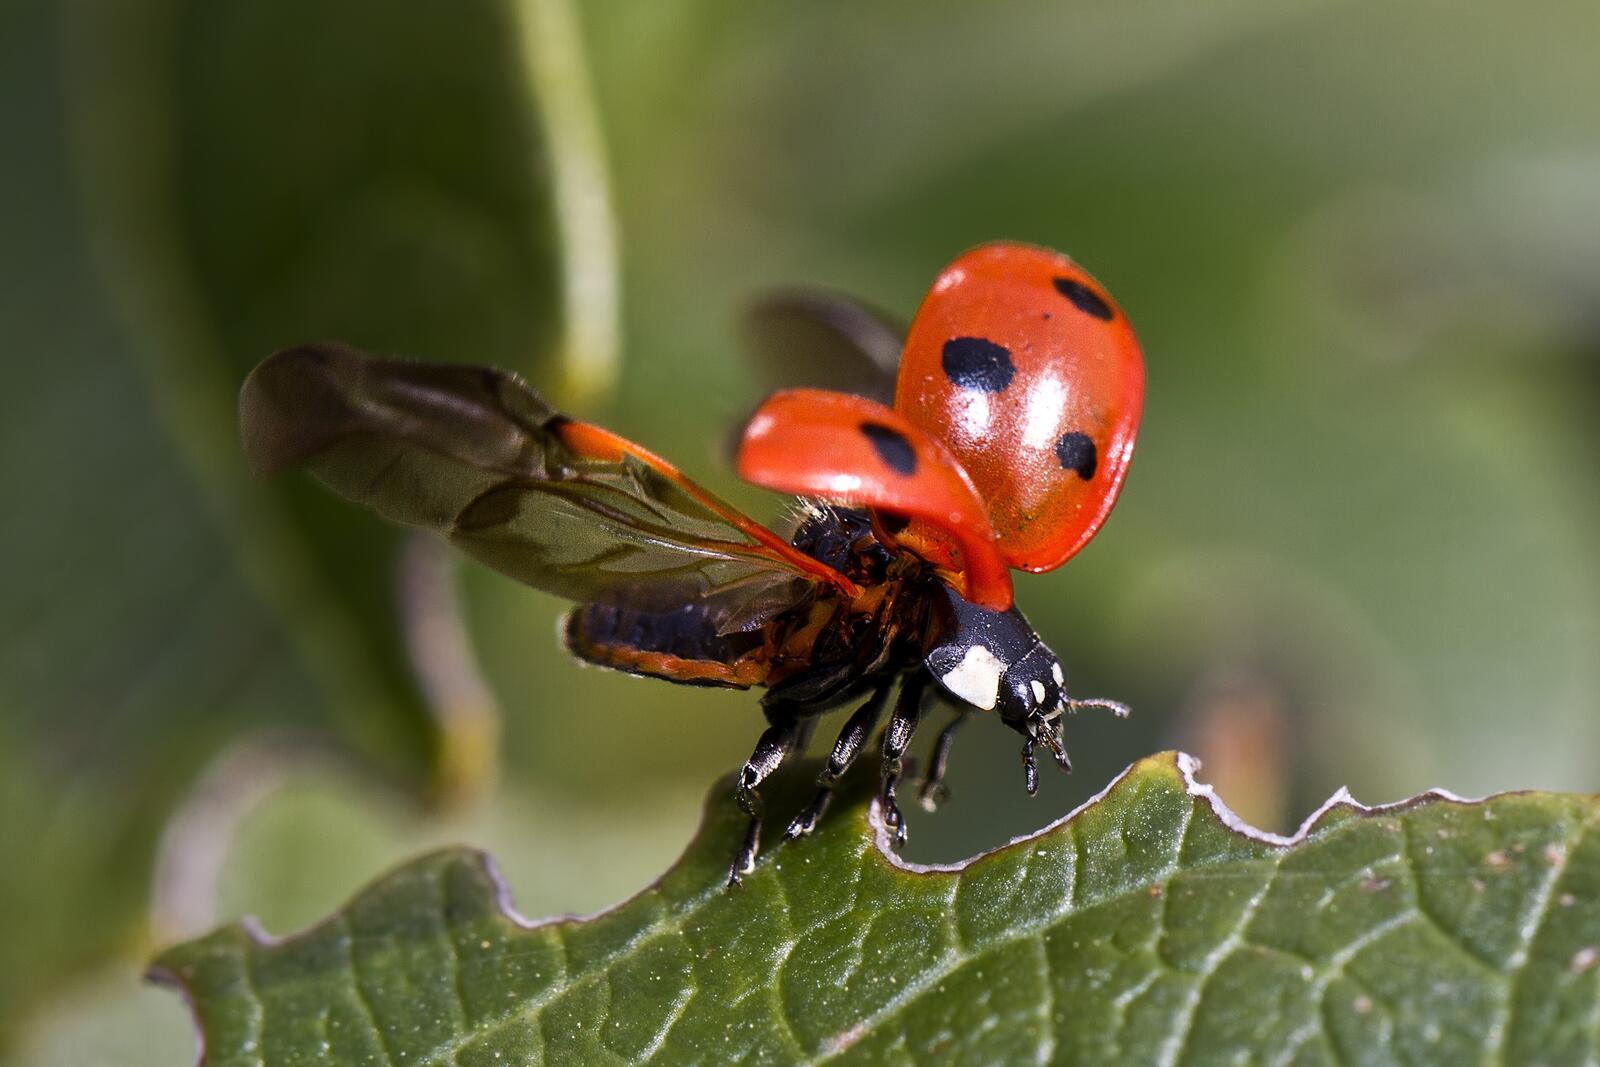 Wallpapers wildlife ladybug arthropod on the desktop